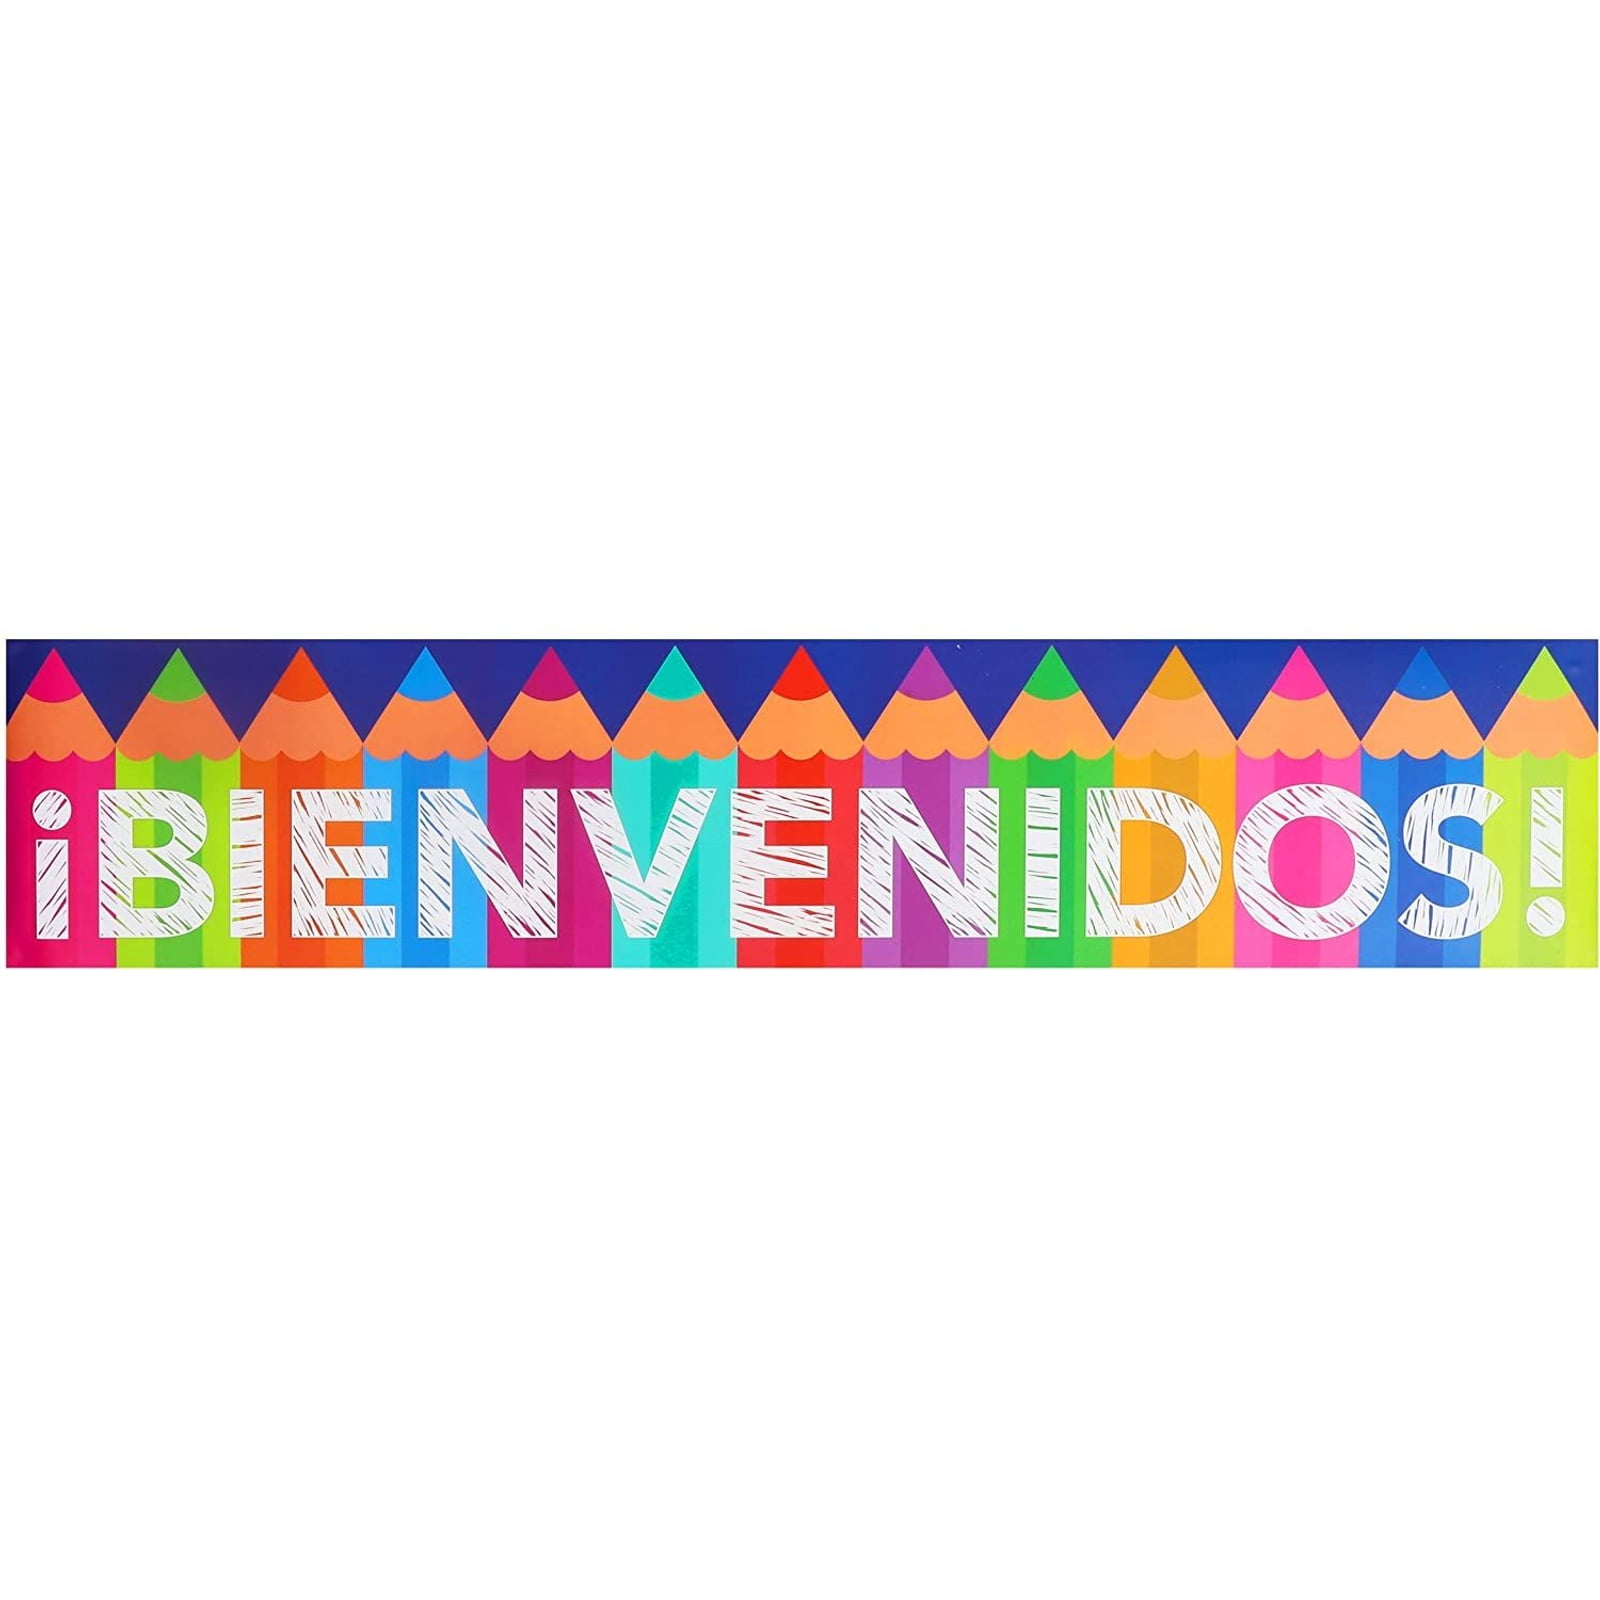 Bienvenido De Vuelta Lettering Translation From Spanish Welcome